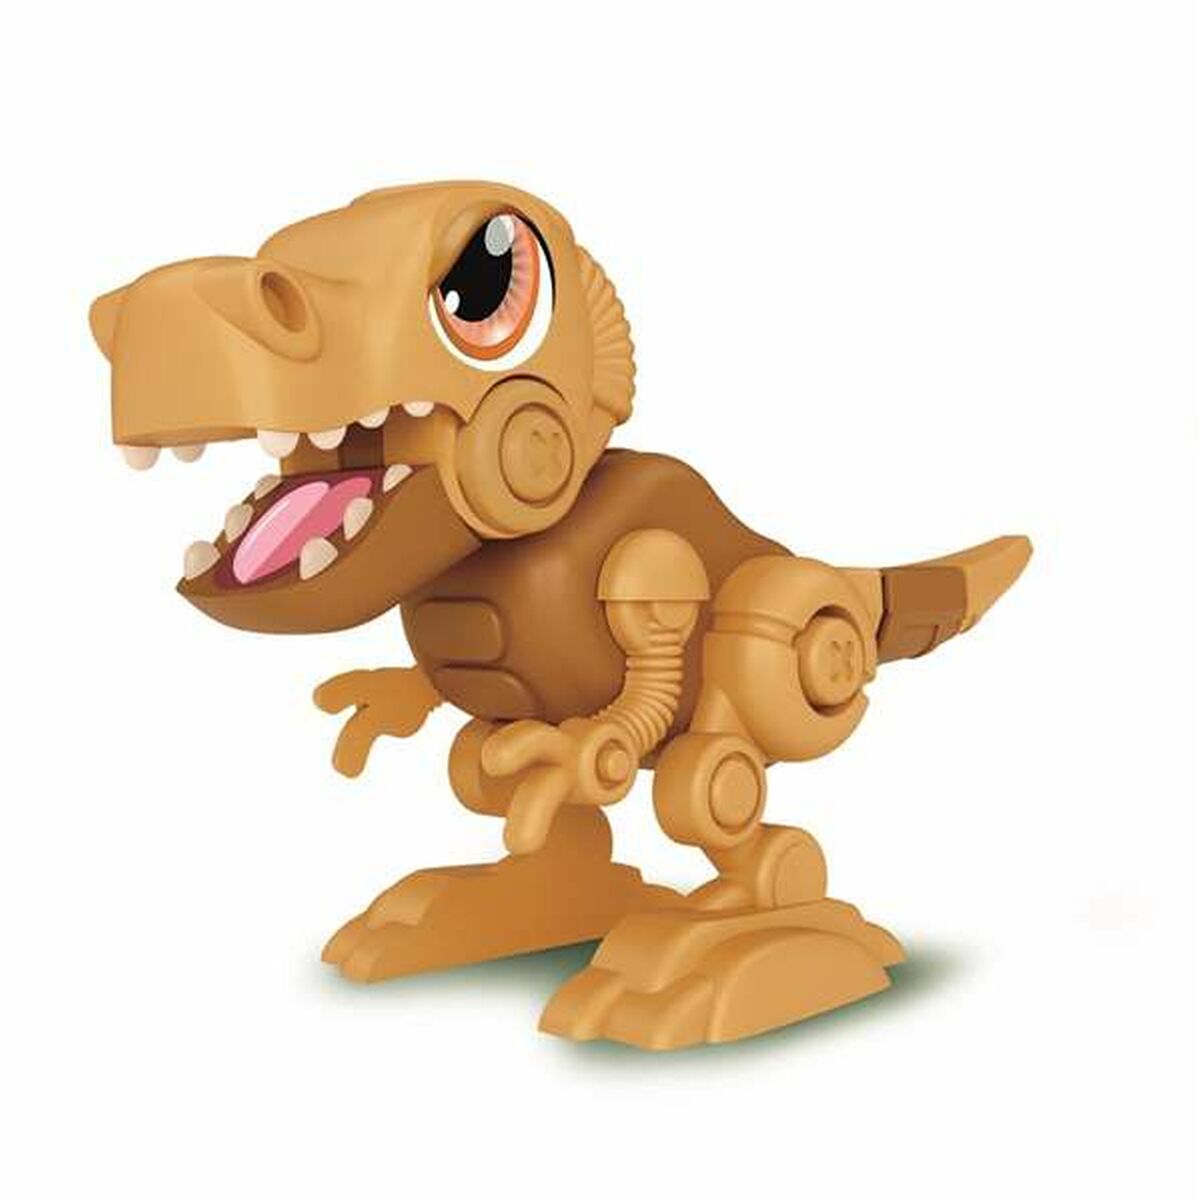 Byggsats Clementoni Dino Bot T-Rex 20 x 20 x 6 cm-Leksaker och spel-Clementoni-peaceofhome.se